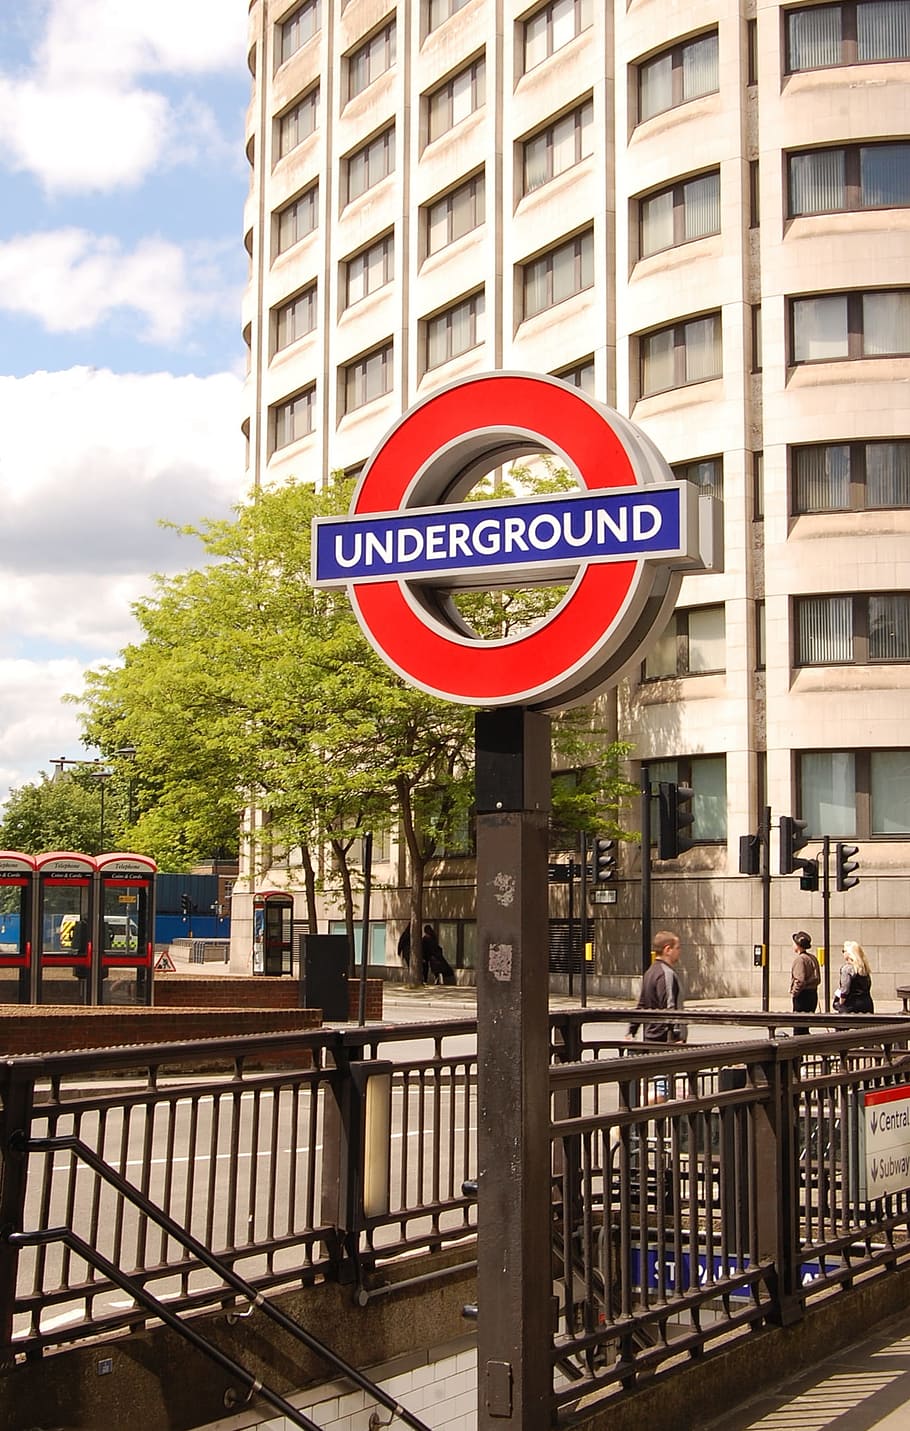 underground, post, building, london, metro, sign, communication, architecture, text, building exterior